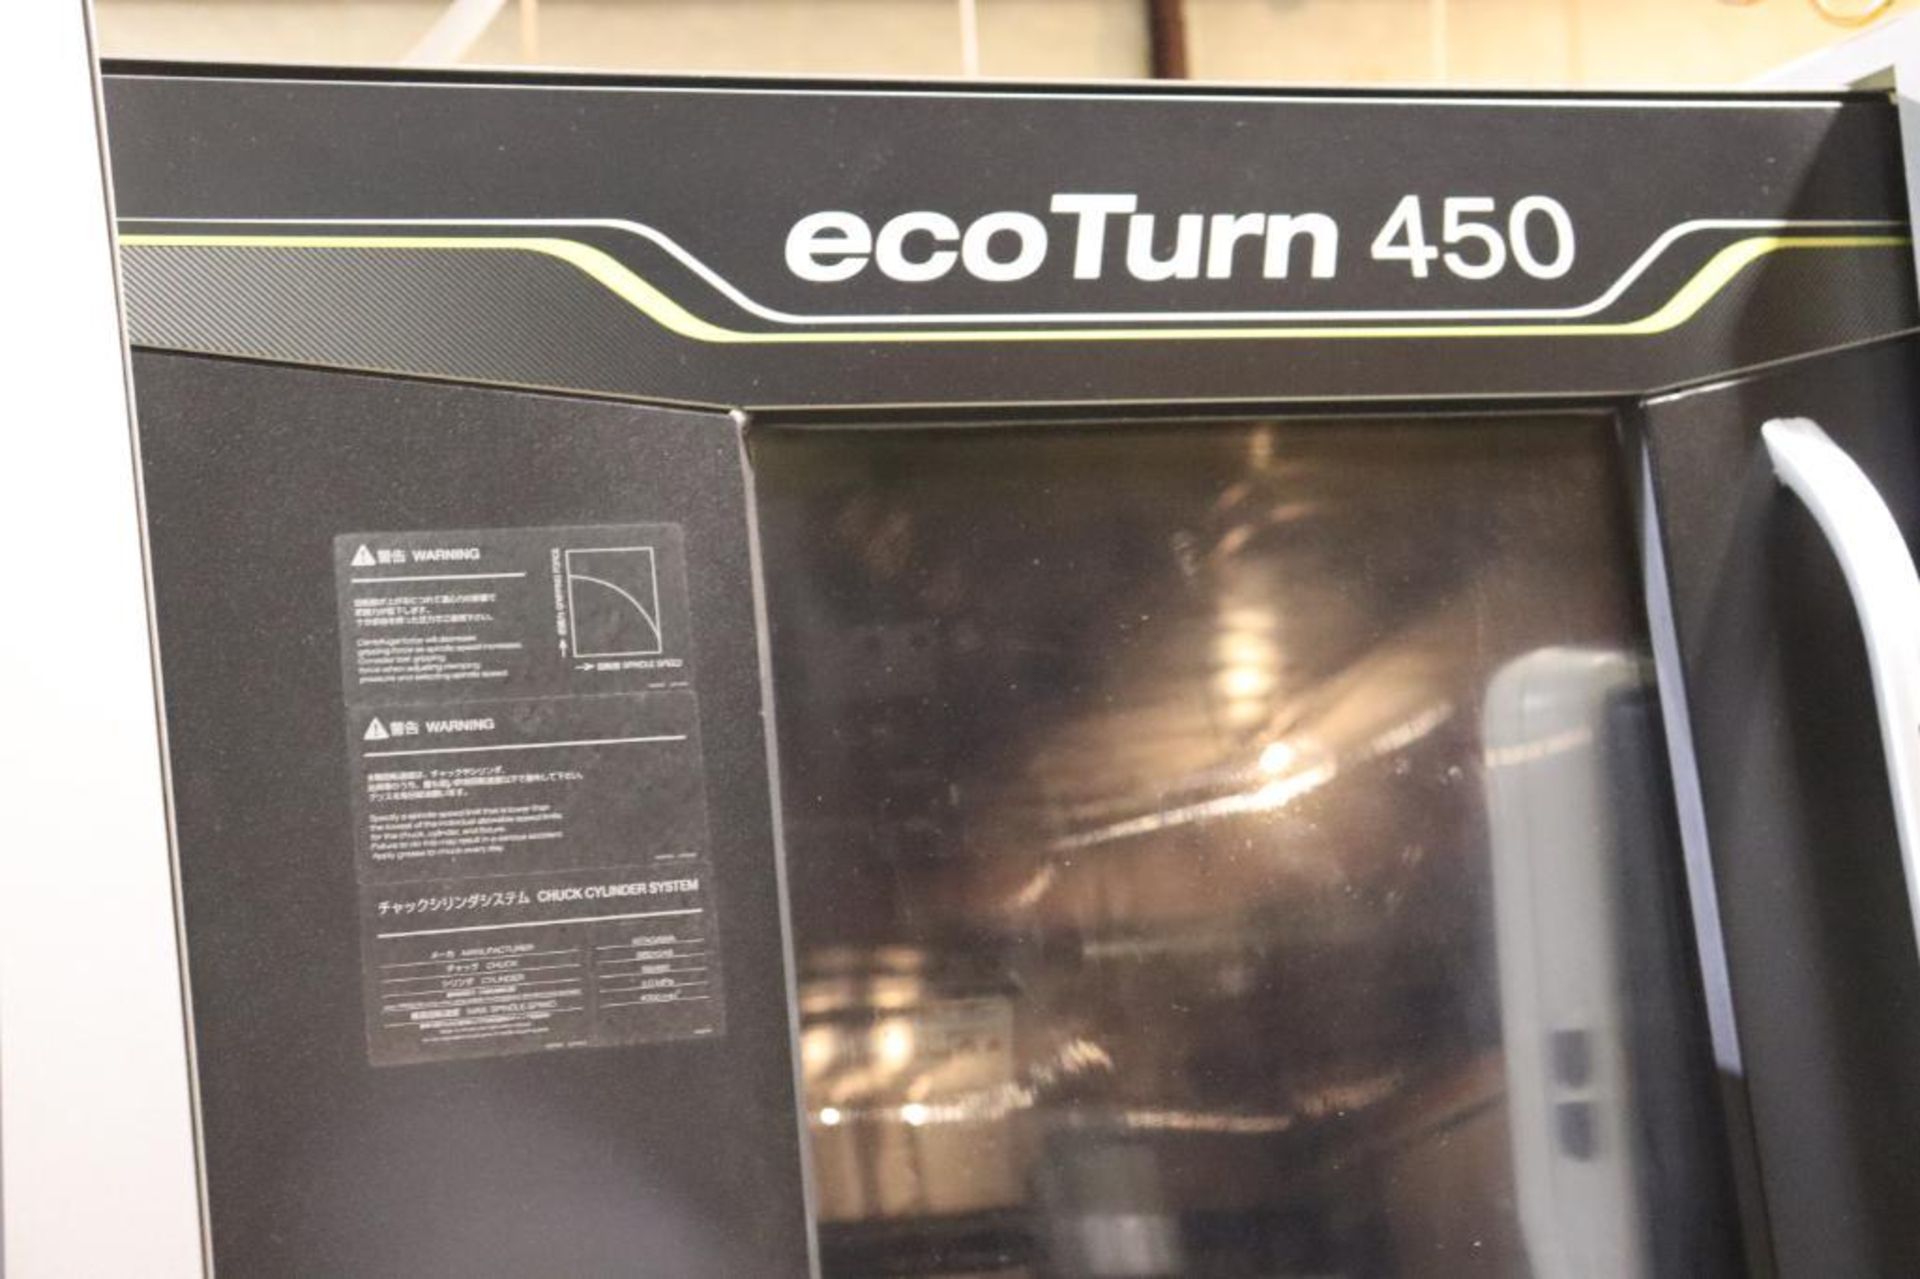 DMG Mori ecoTurn 450 V1 CNC turning center 2015 - Image 6 of 26